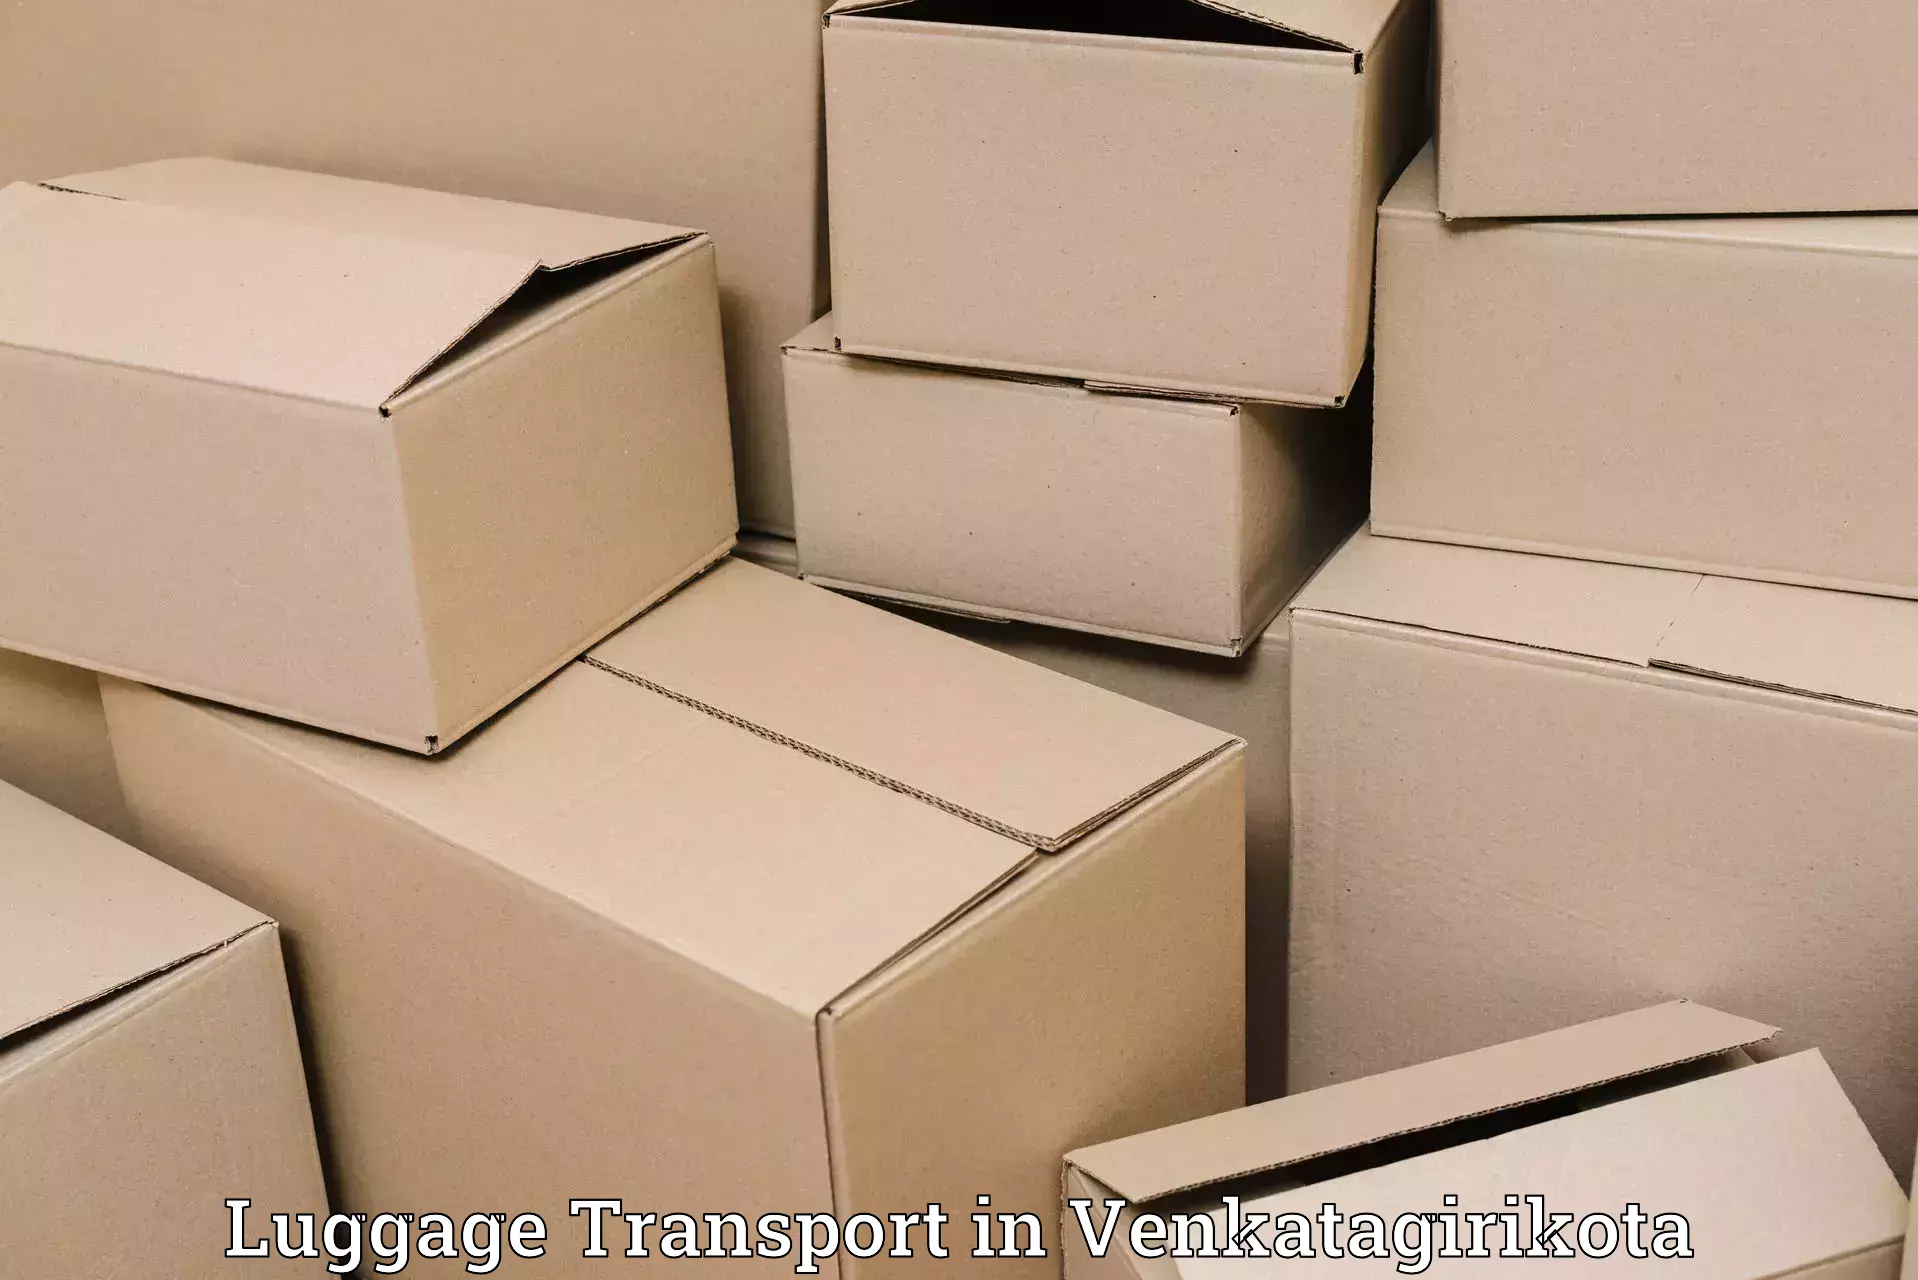 Luggage transport operations in Venkatagirikota